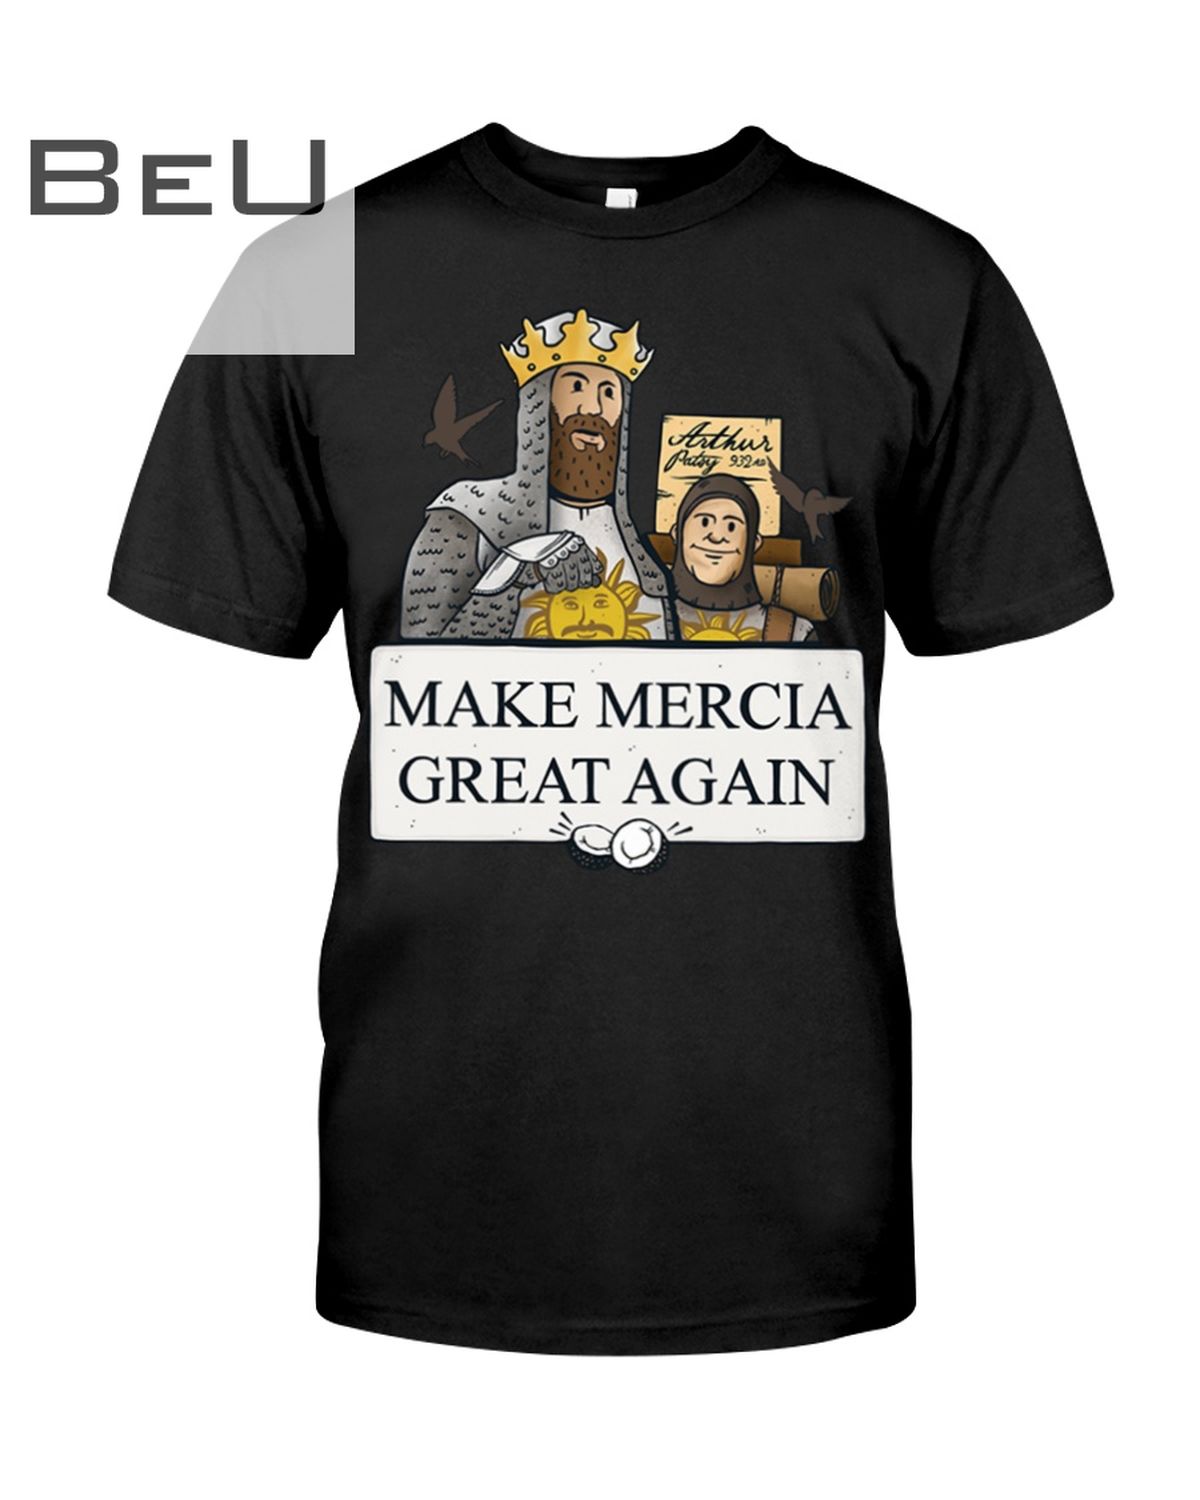 Make Mercia Great Again Shirt